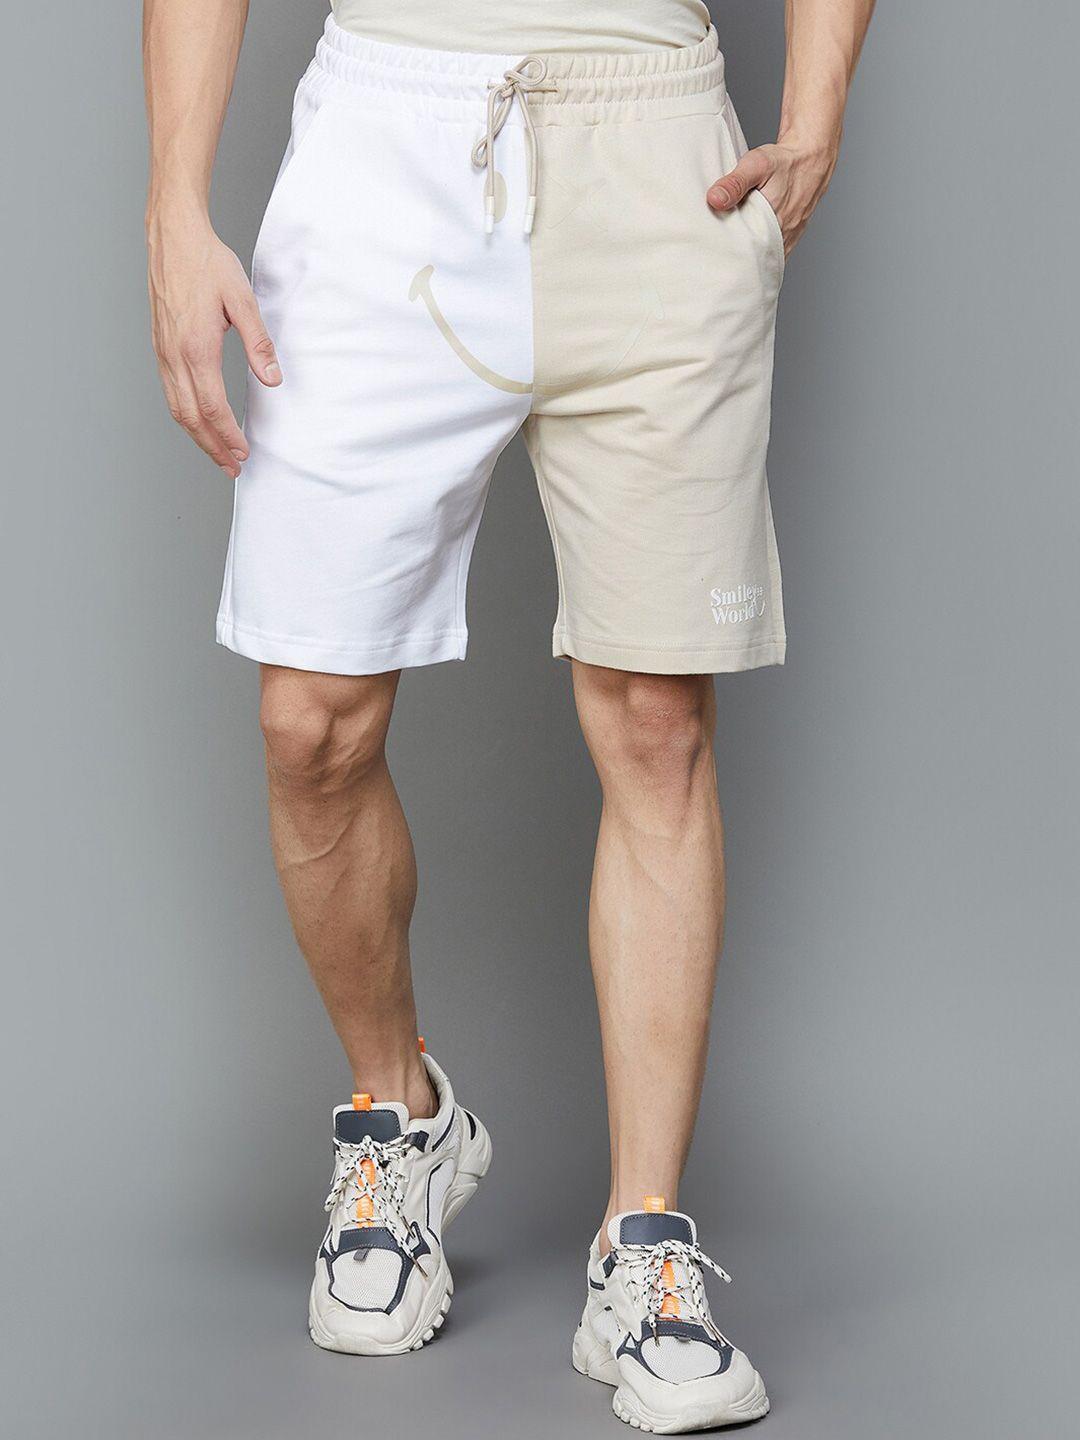 smileyworld men mid-rise colourblocked cotton shorts